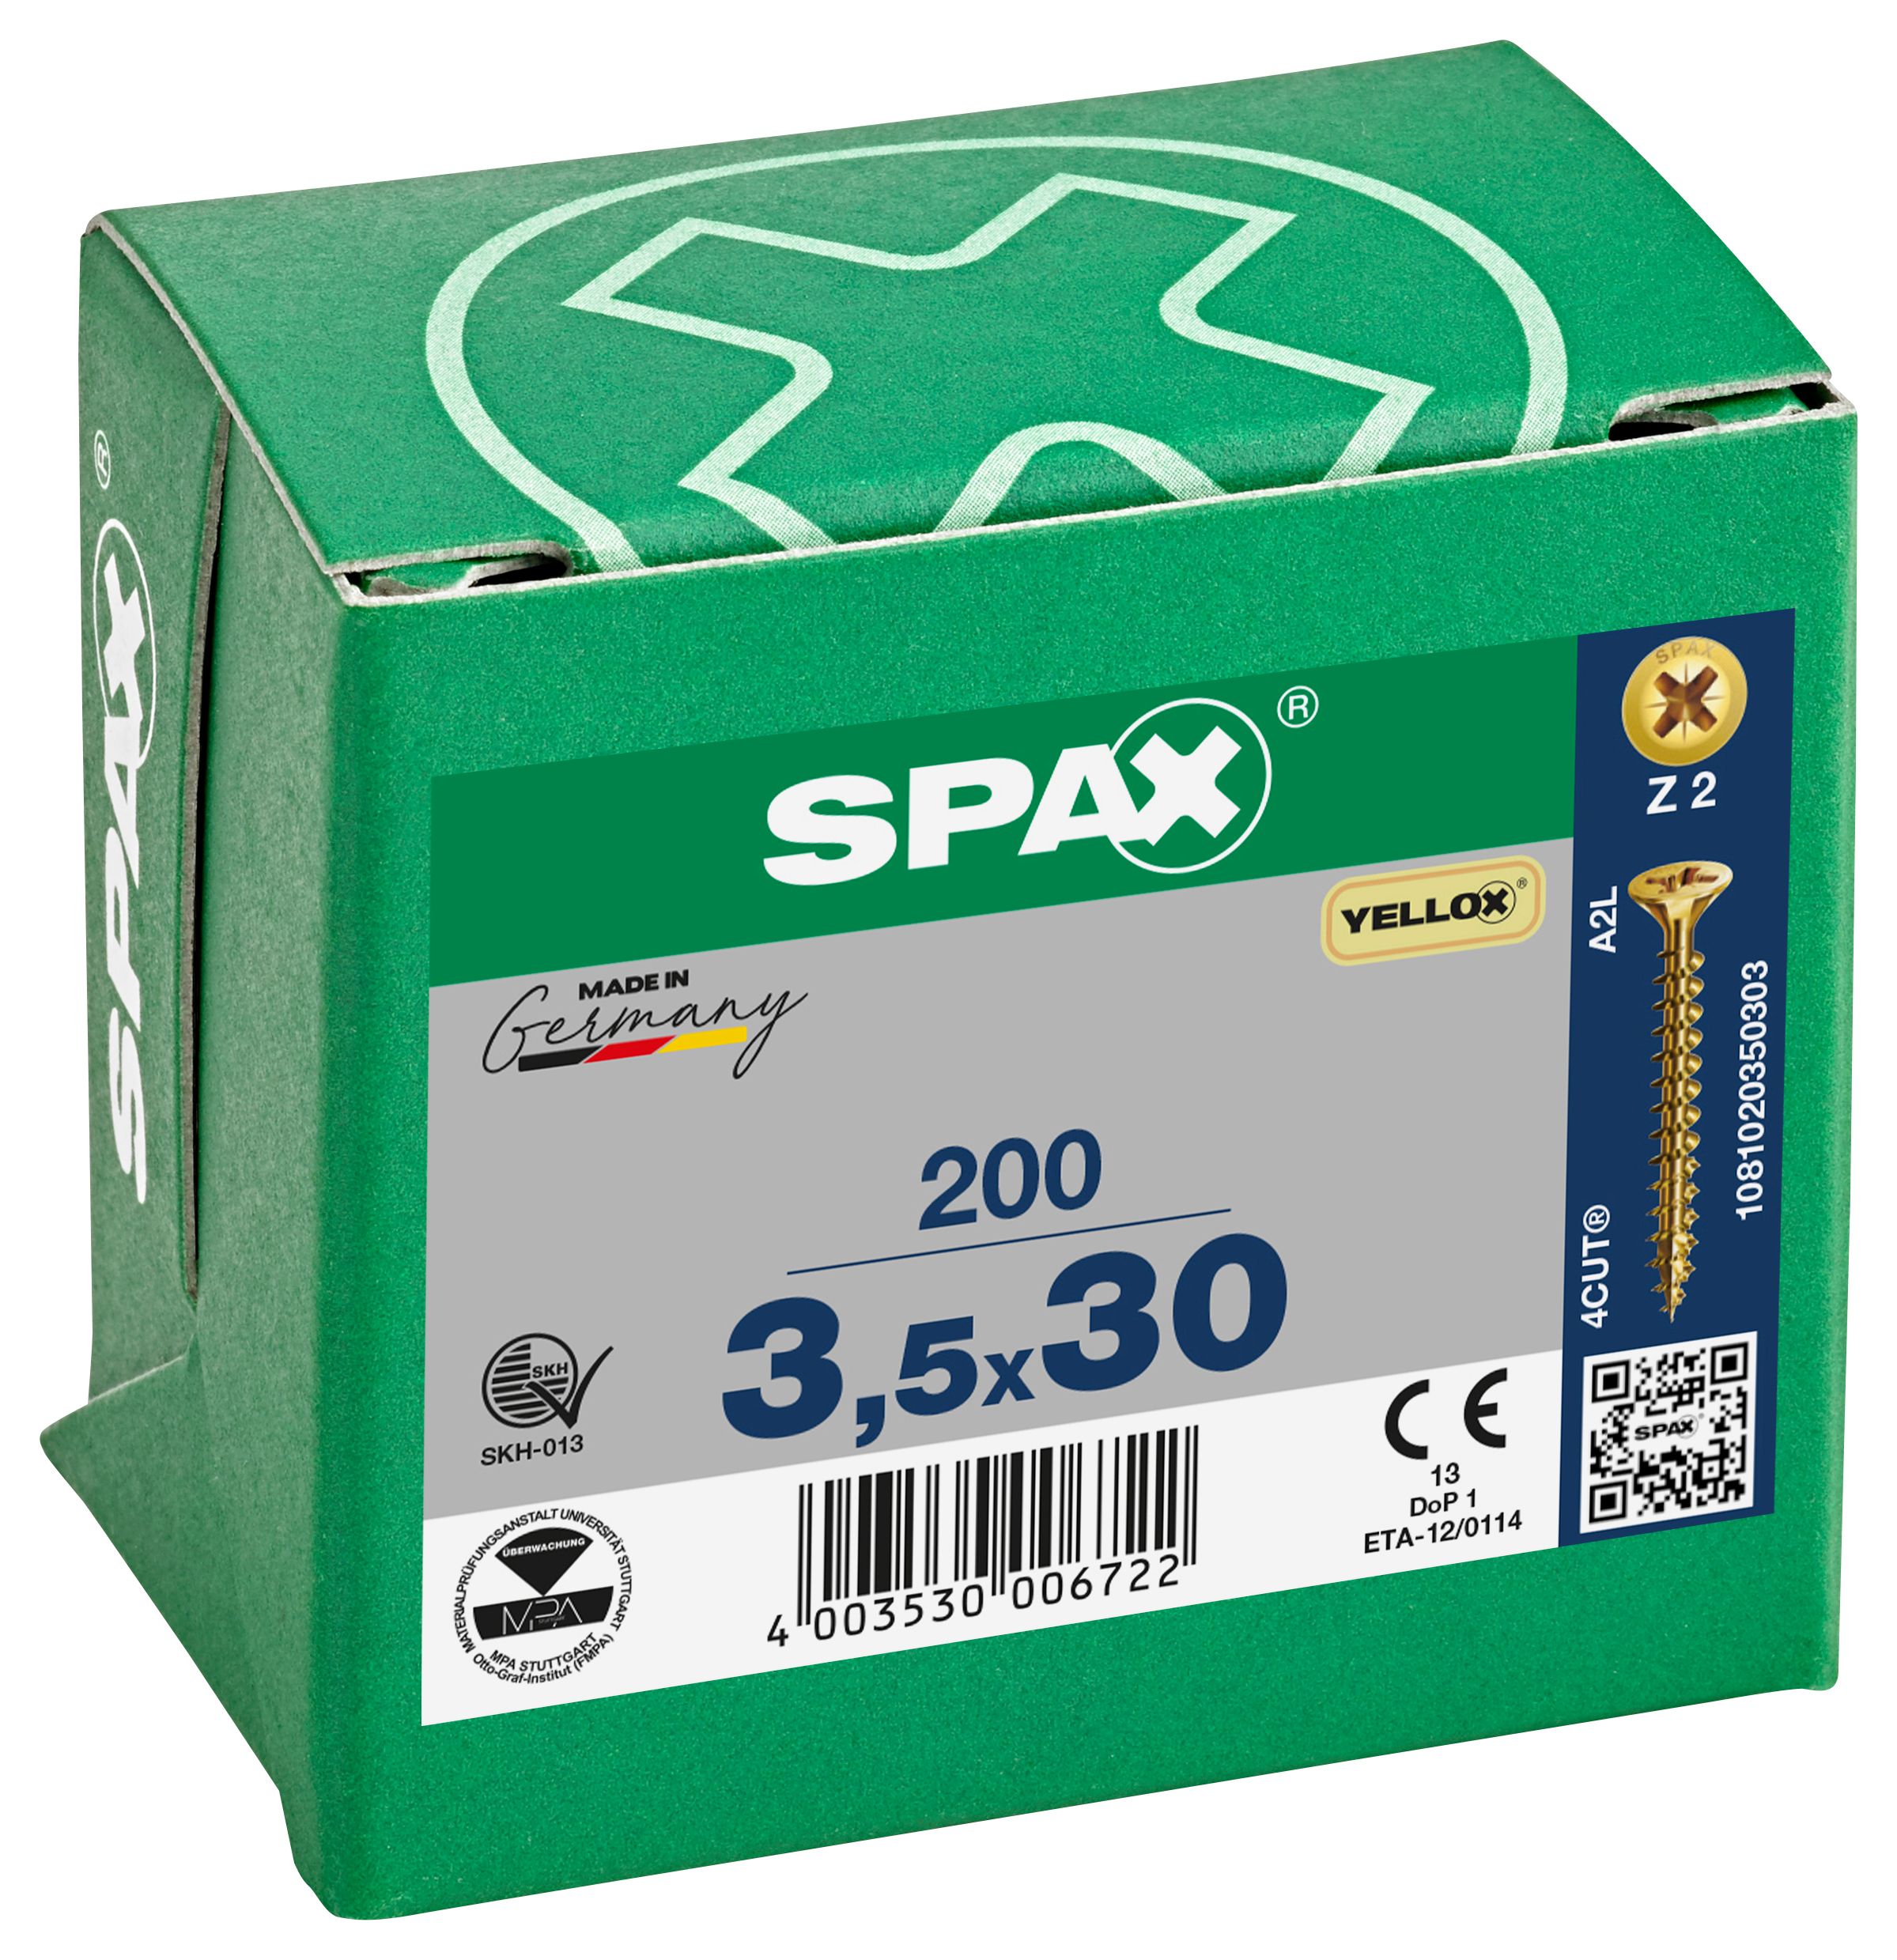 Spax Pz Countersunk Yellox Screws - 3.5x30mm Pack Of 200